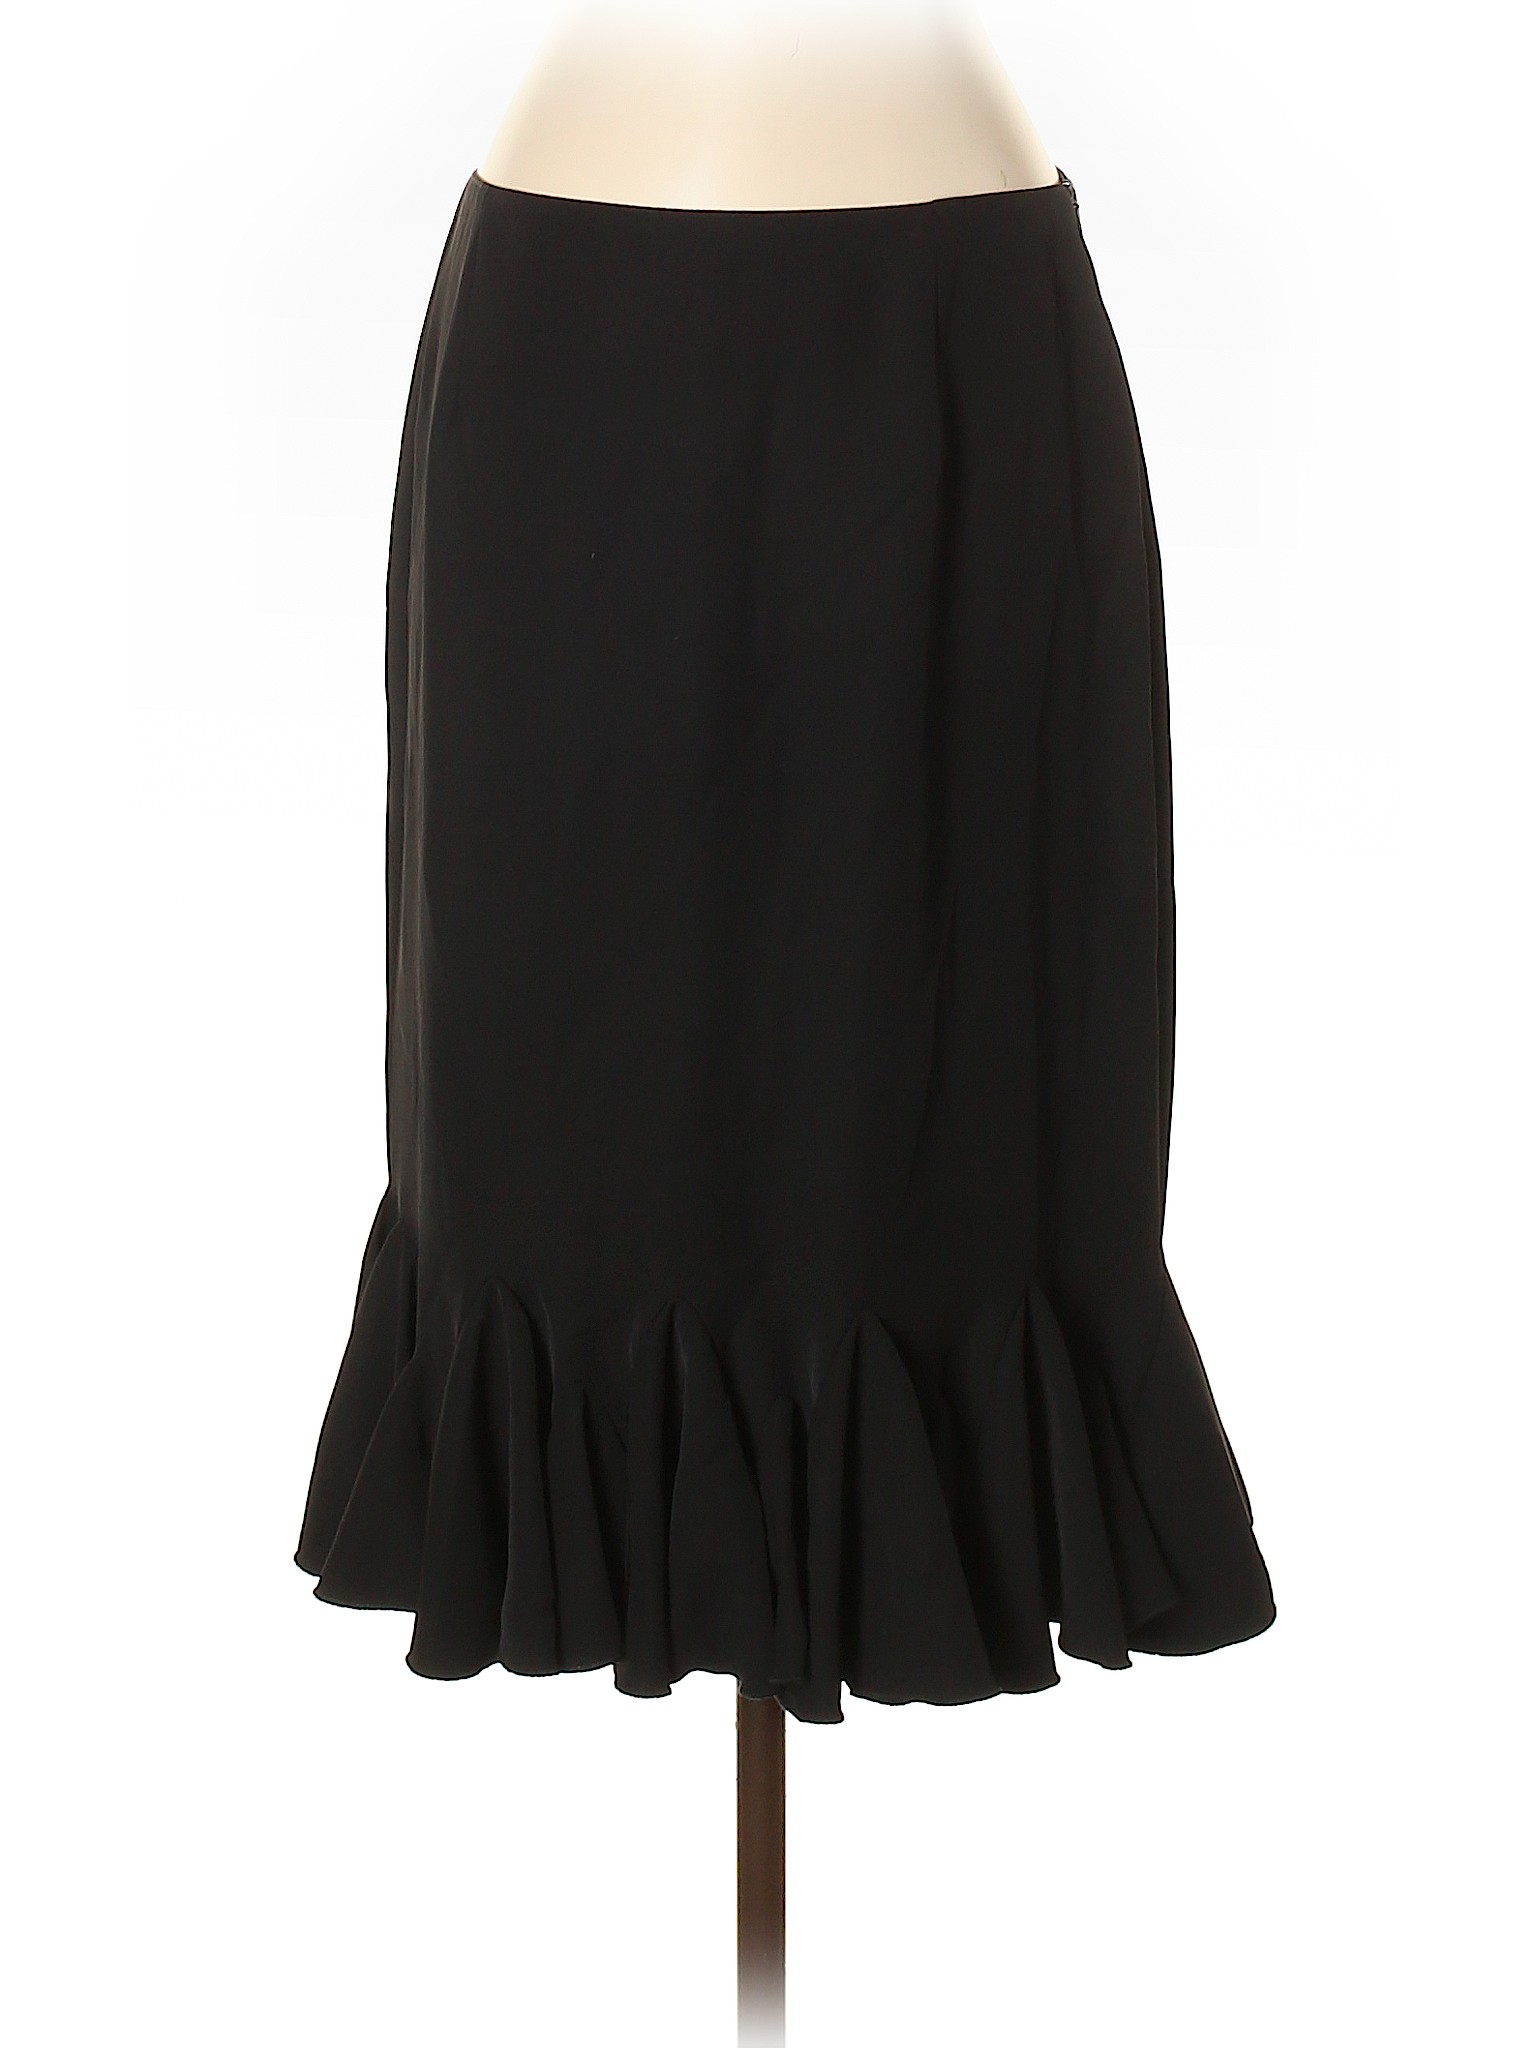 Blumarine Women Black Casual Skirt 44 italian | eBay